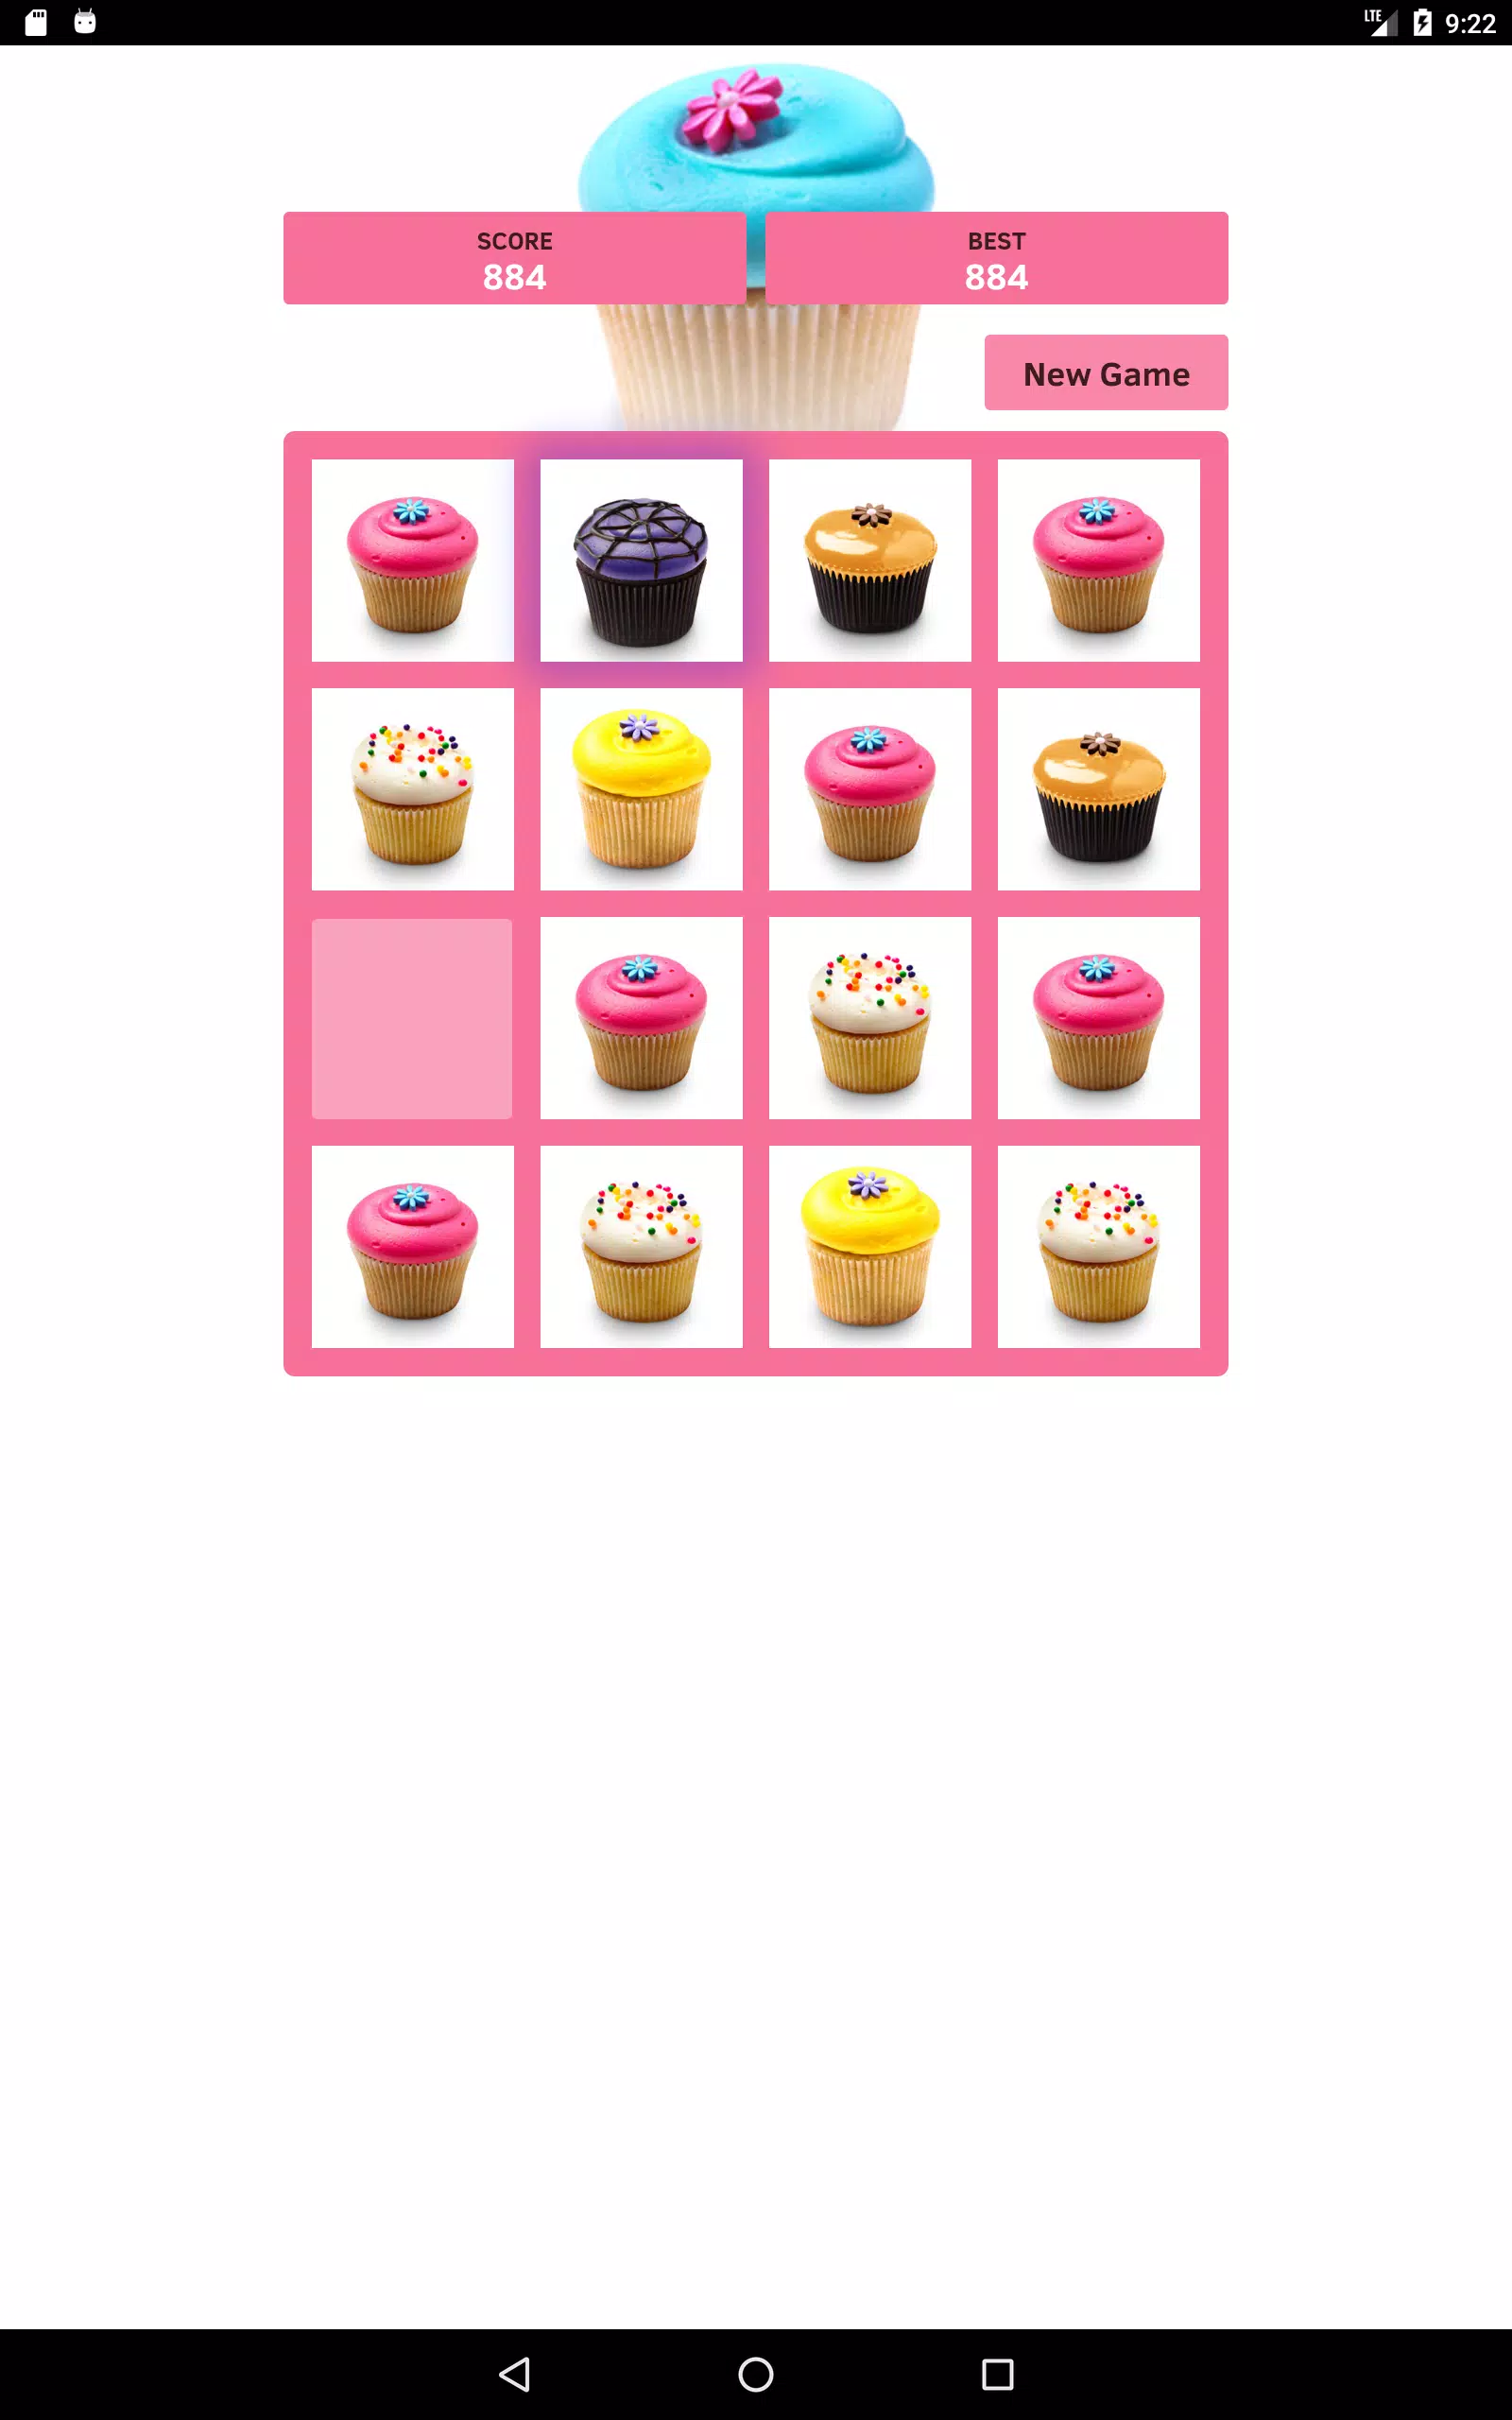 2048 Cupcake on iOS — price history, screenshots, discounts • USA